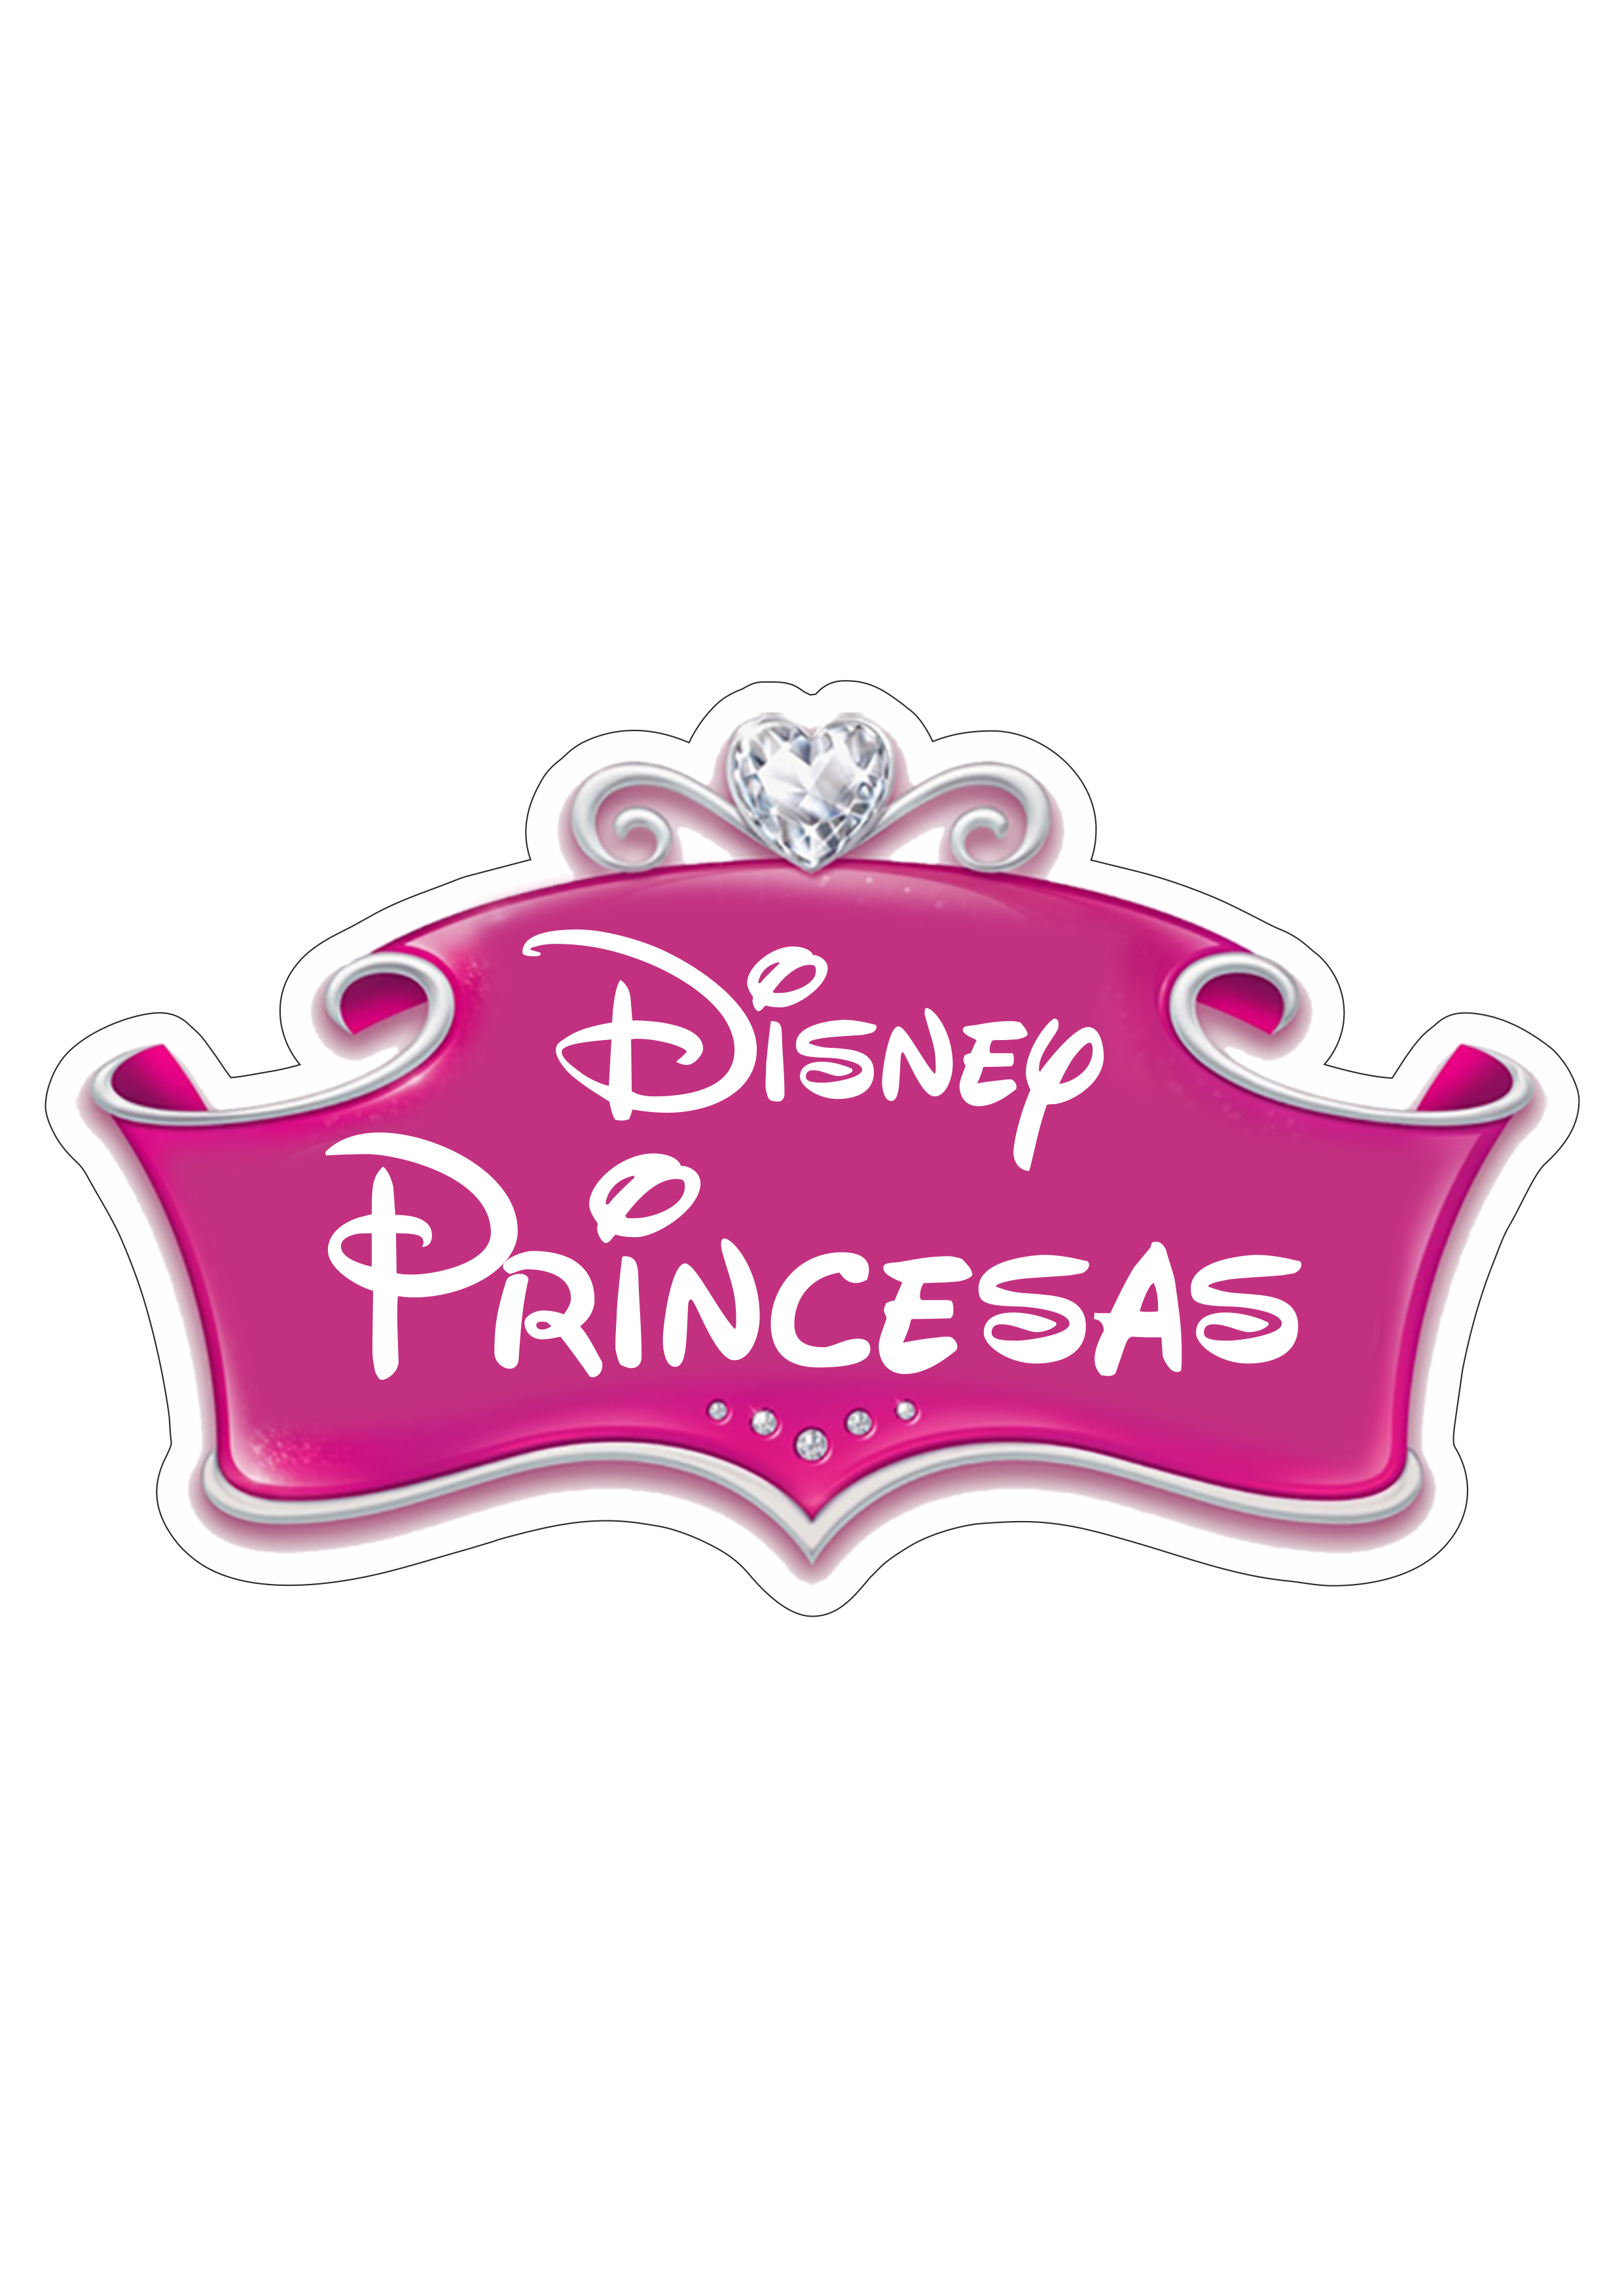 Disney princesas logomarca fundo transparente png